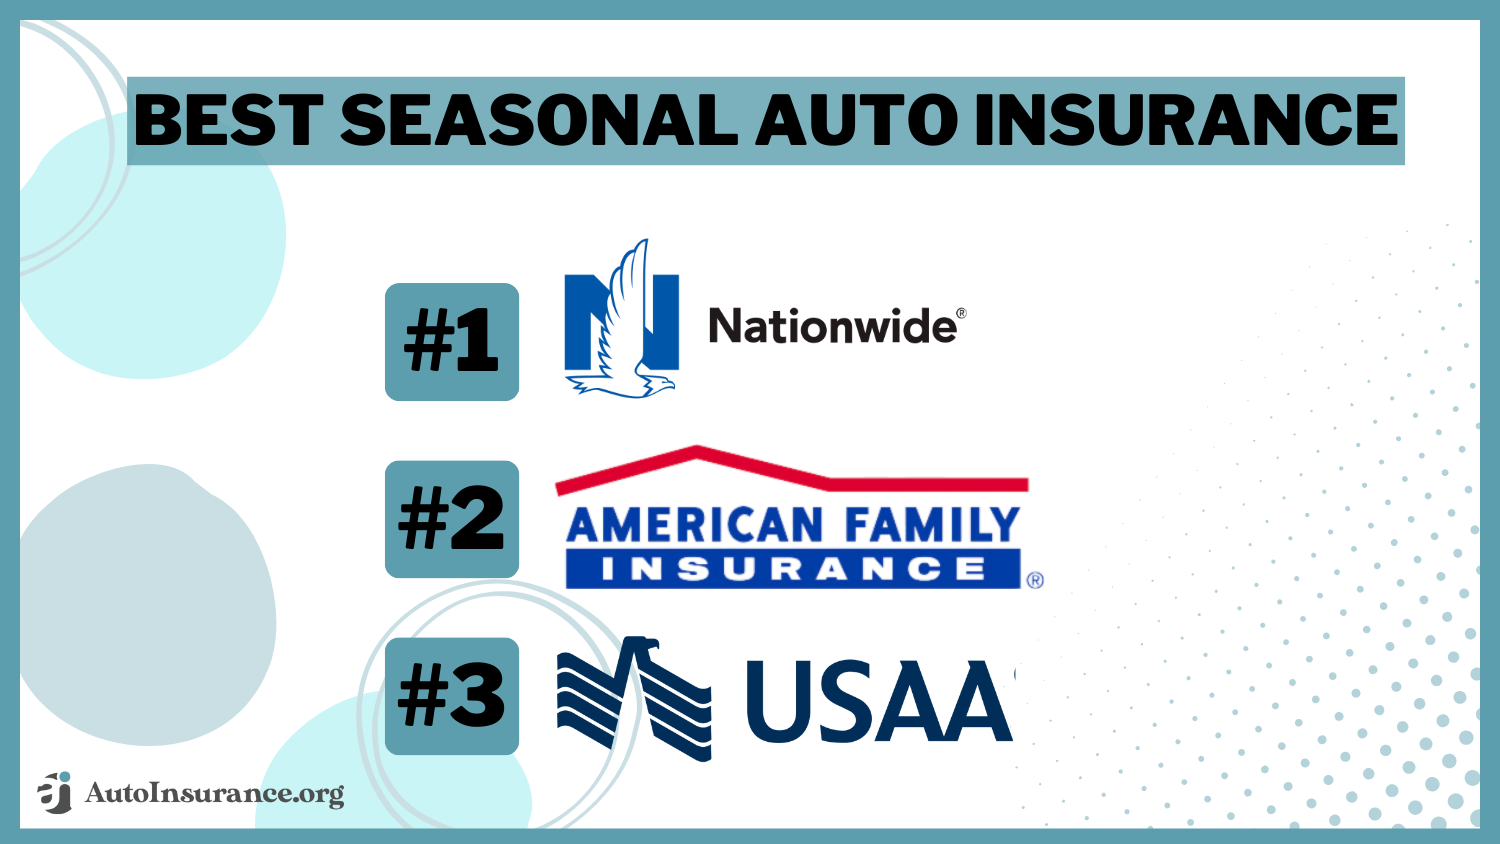 Best Seasonal Auto Insurance - Nationwide, American Family, USAA